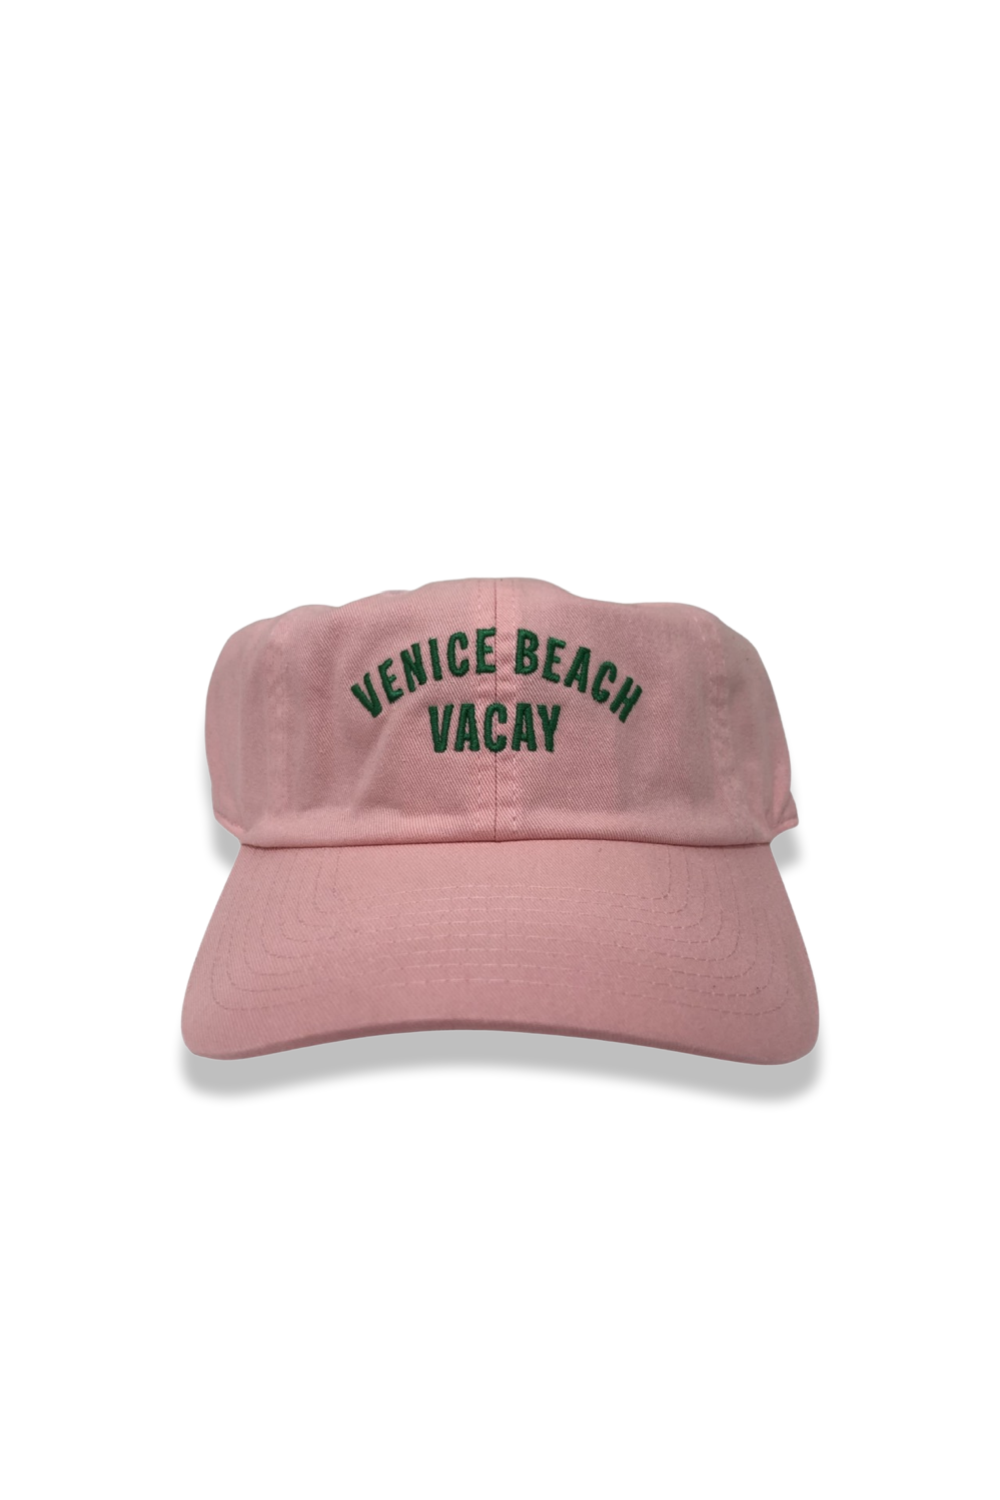 Venice Beach Vacay Raglan Wash Ball Park Cap Pink